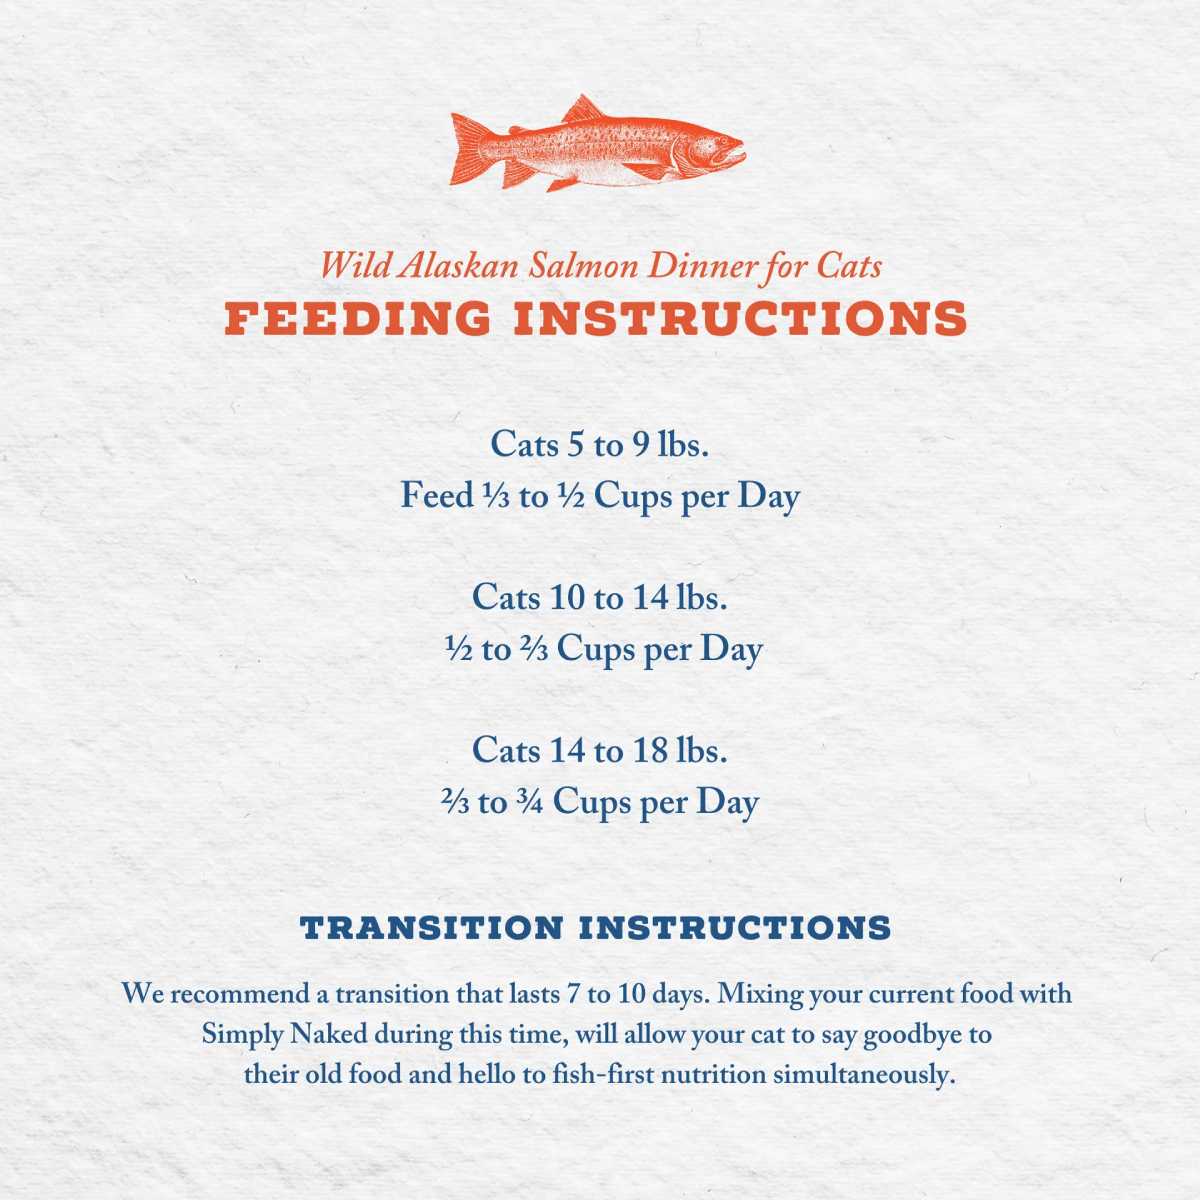 Wild Alaskan Salmon Dinner for Cats Feeding Instructions